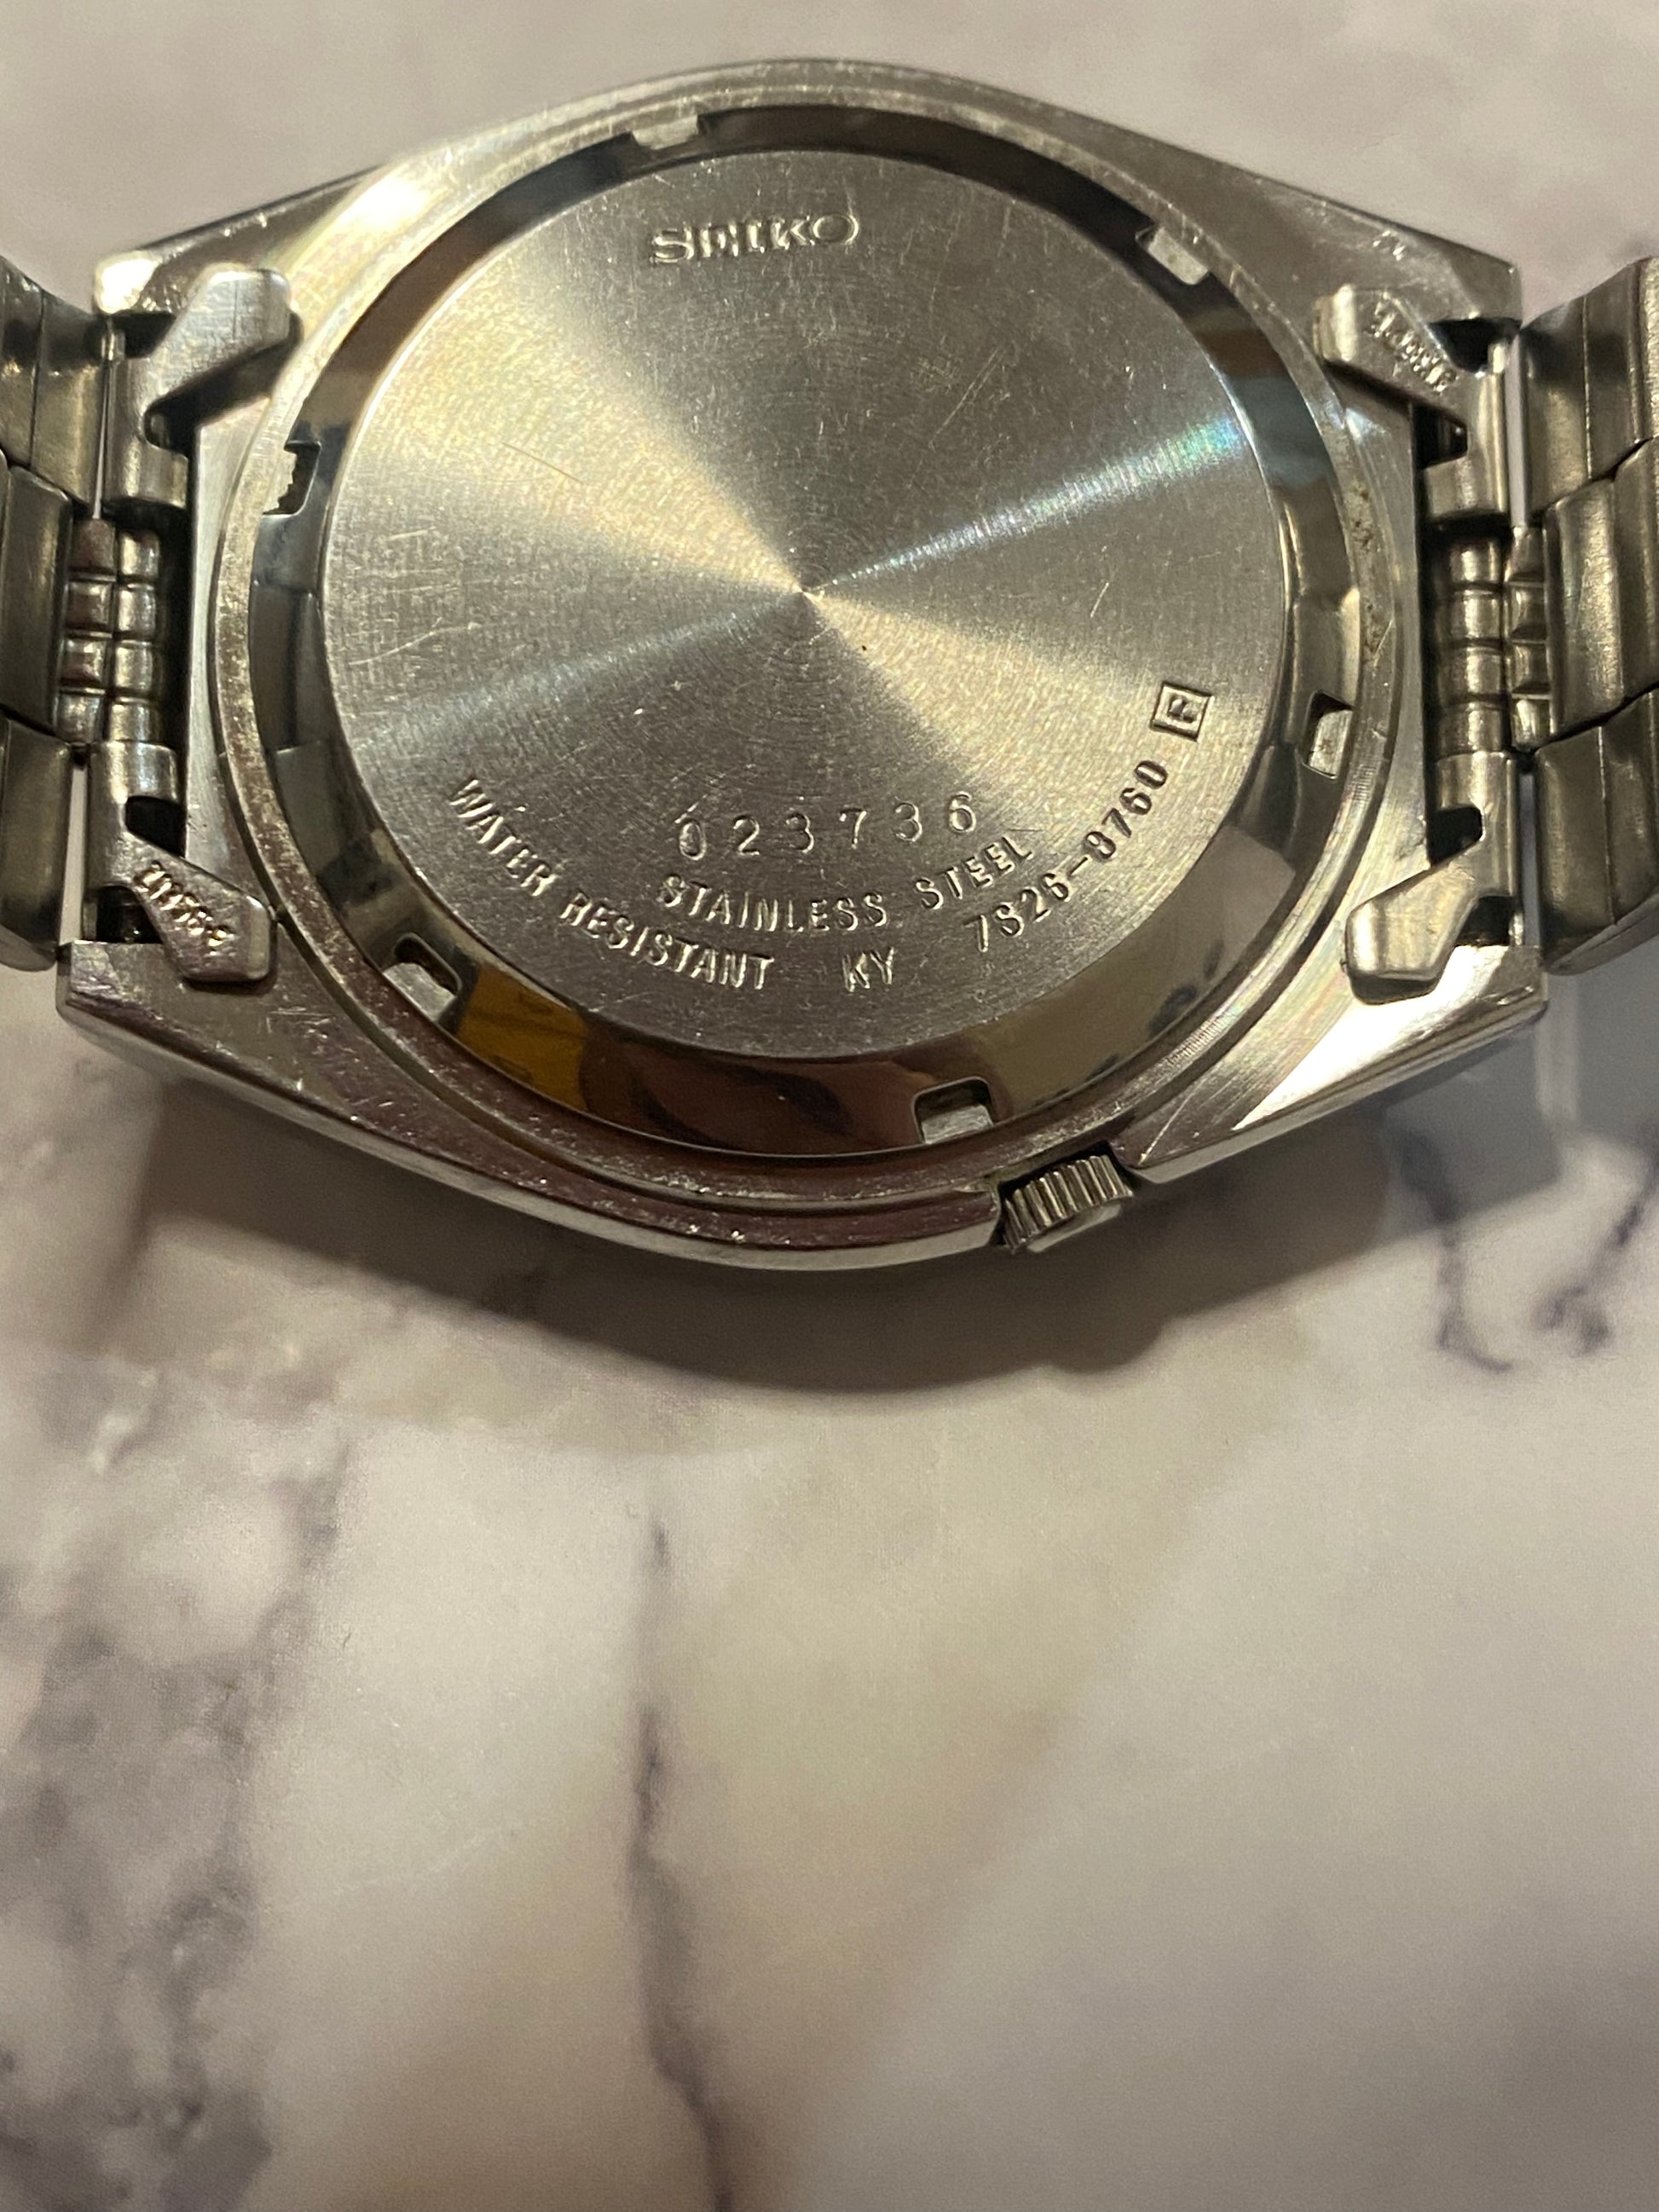 Seiko 5 Automatic 7S26-8760 Feb 2000 – The Wrist Watcher